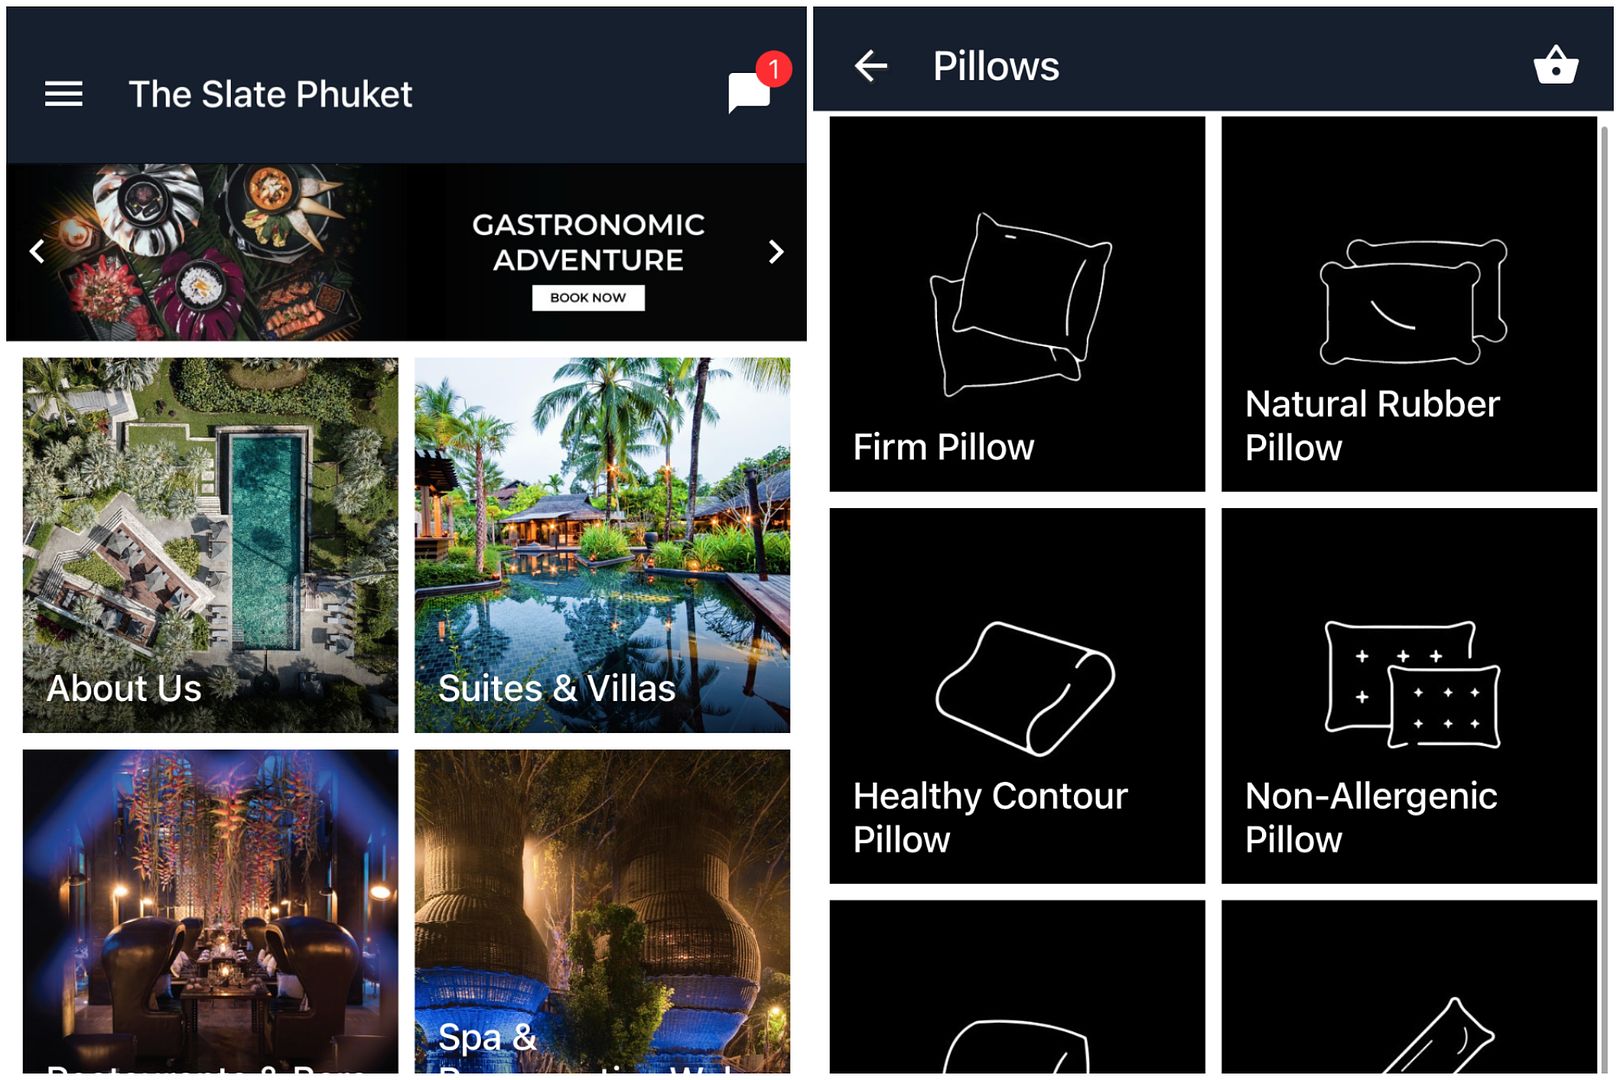 The Slate Phuket app